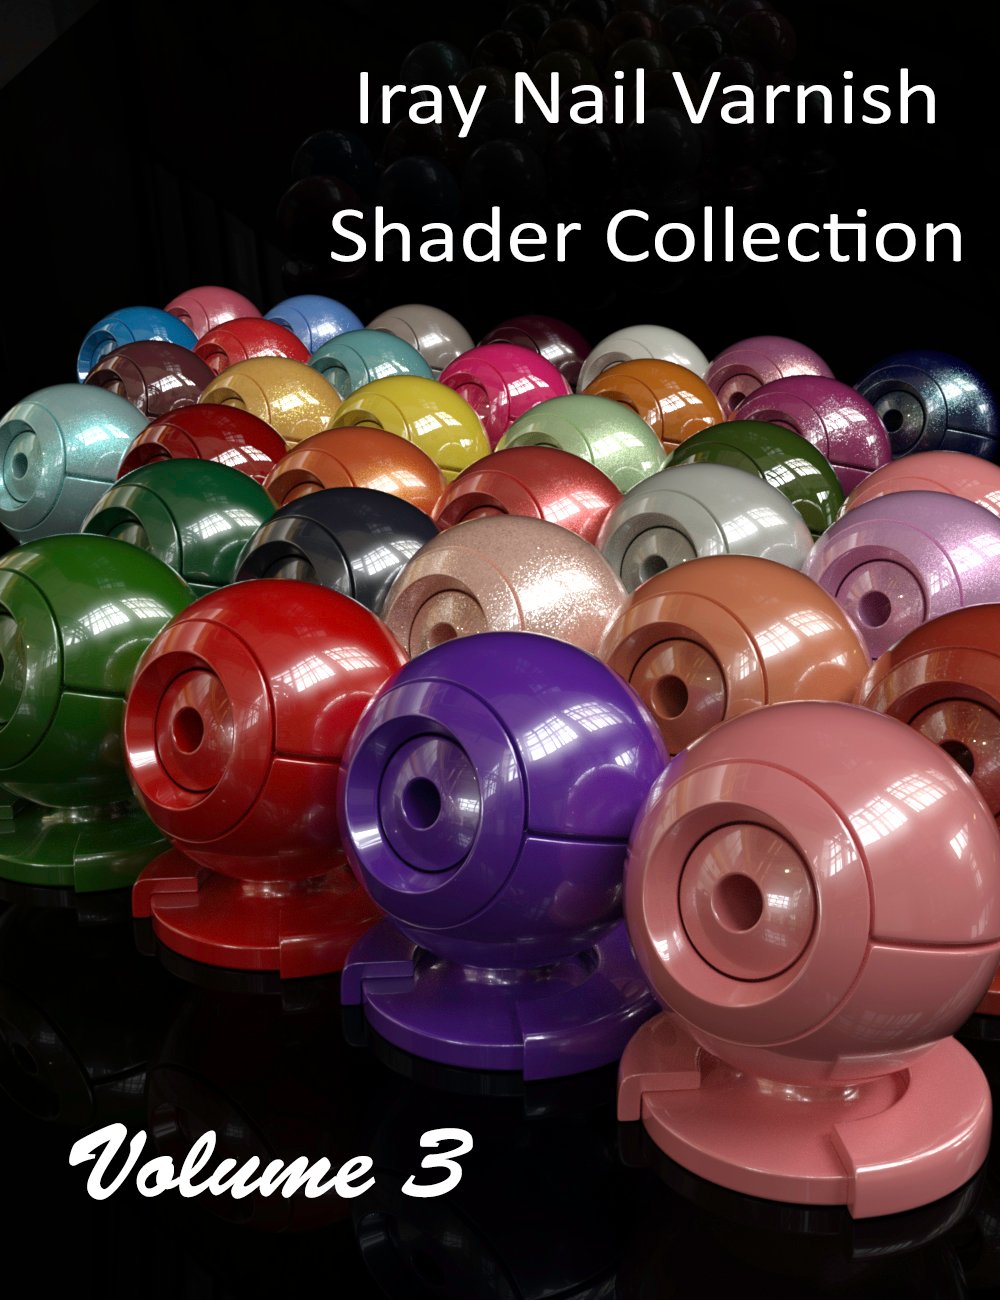 Iray Nail Varnish Shaders Volume 3 by: Serum, 3D Models by Daz 3D